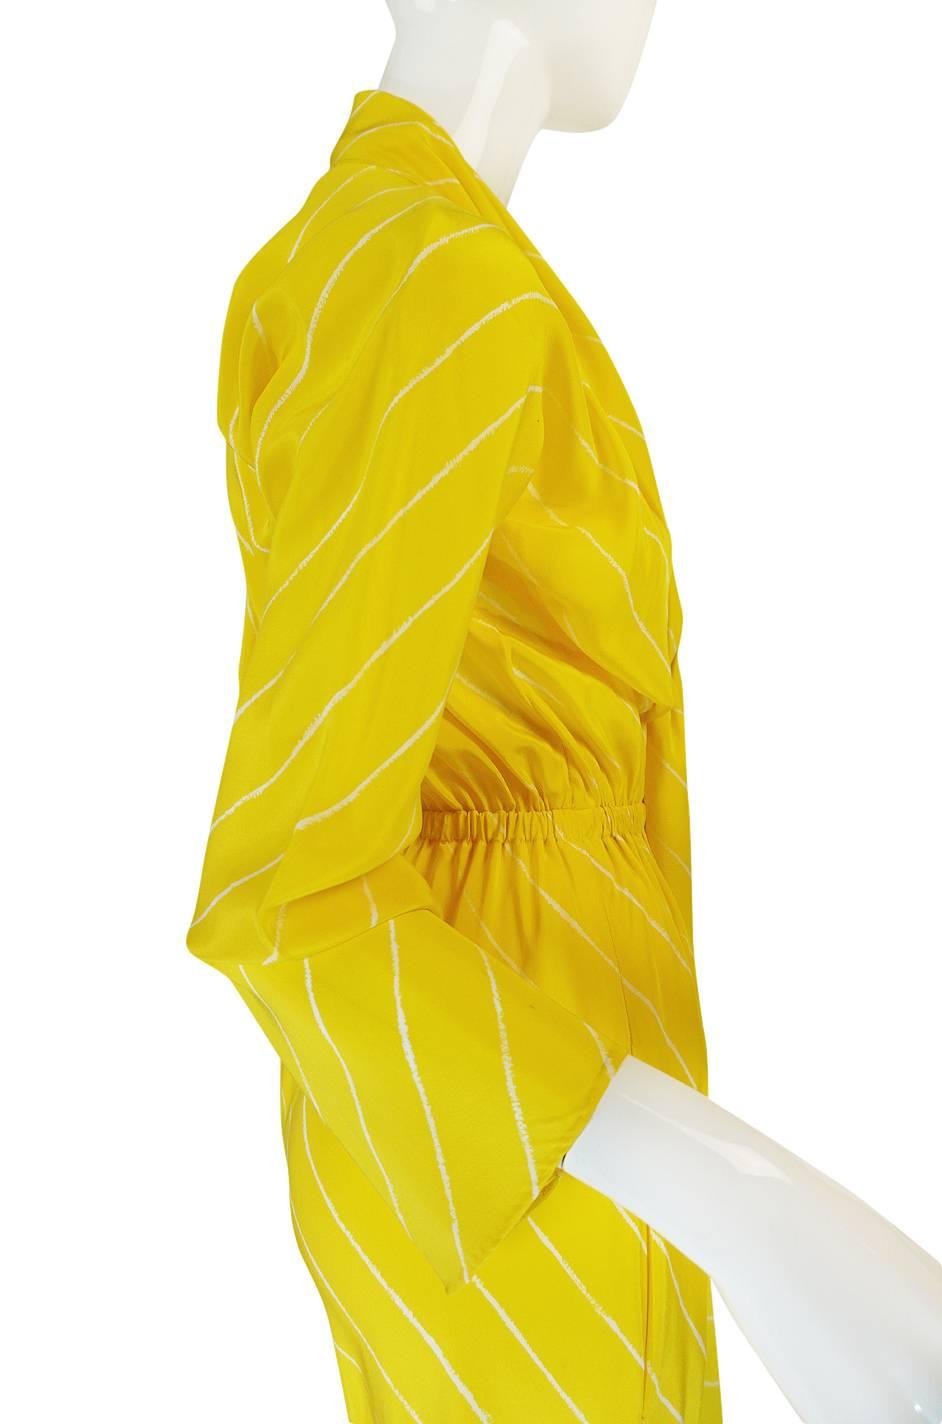 S/S 1976 Halston Demi-Couture Bias Cut Yellow Silk Dress 3